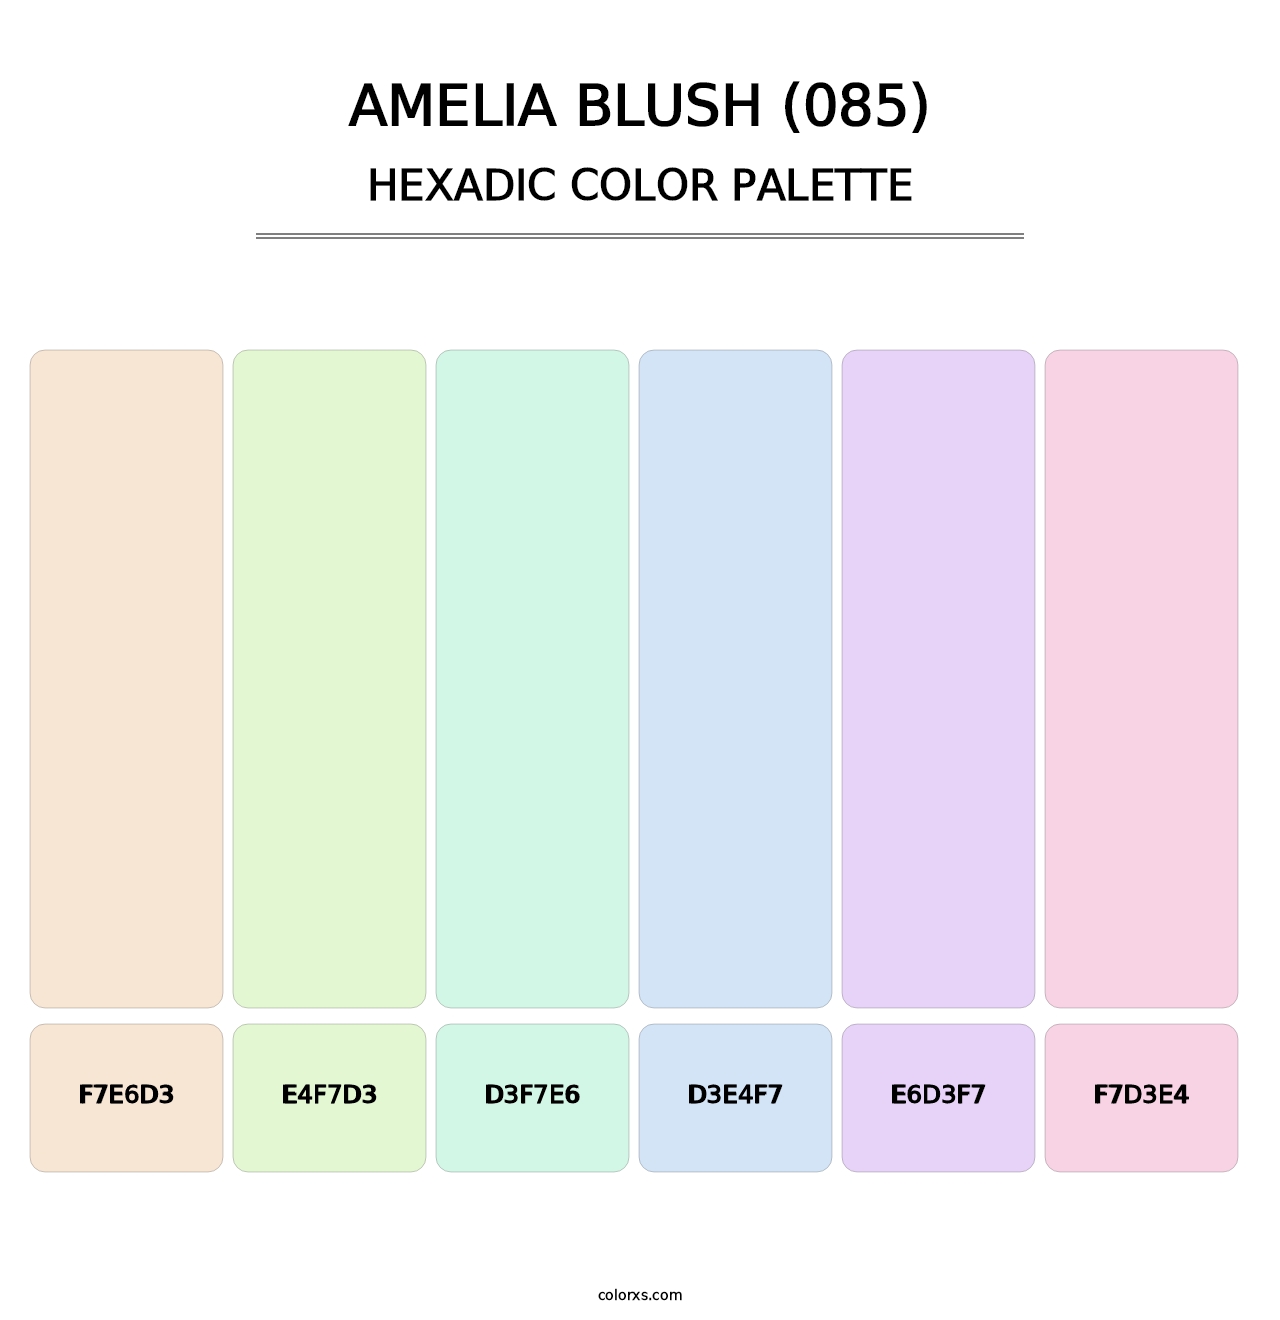 Amelia Blush (085) - Hexadic Color Palette